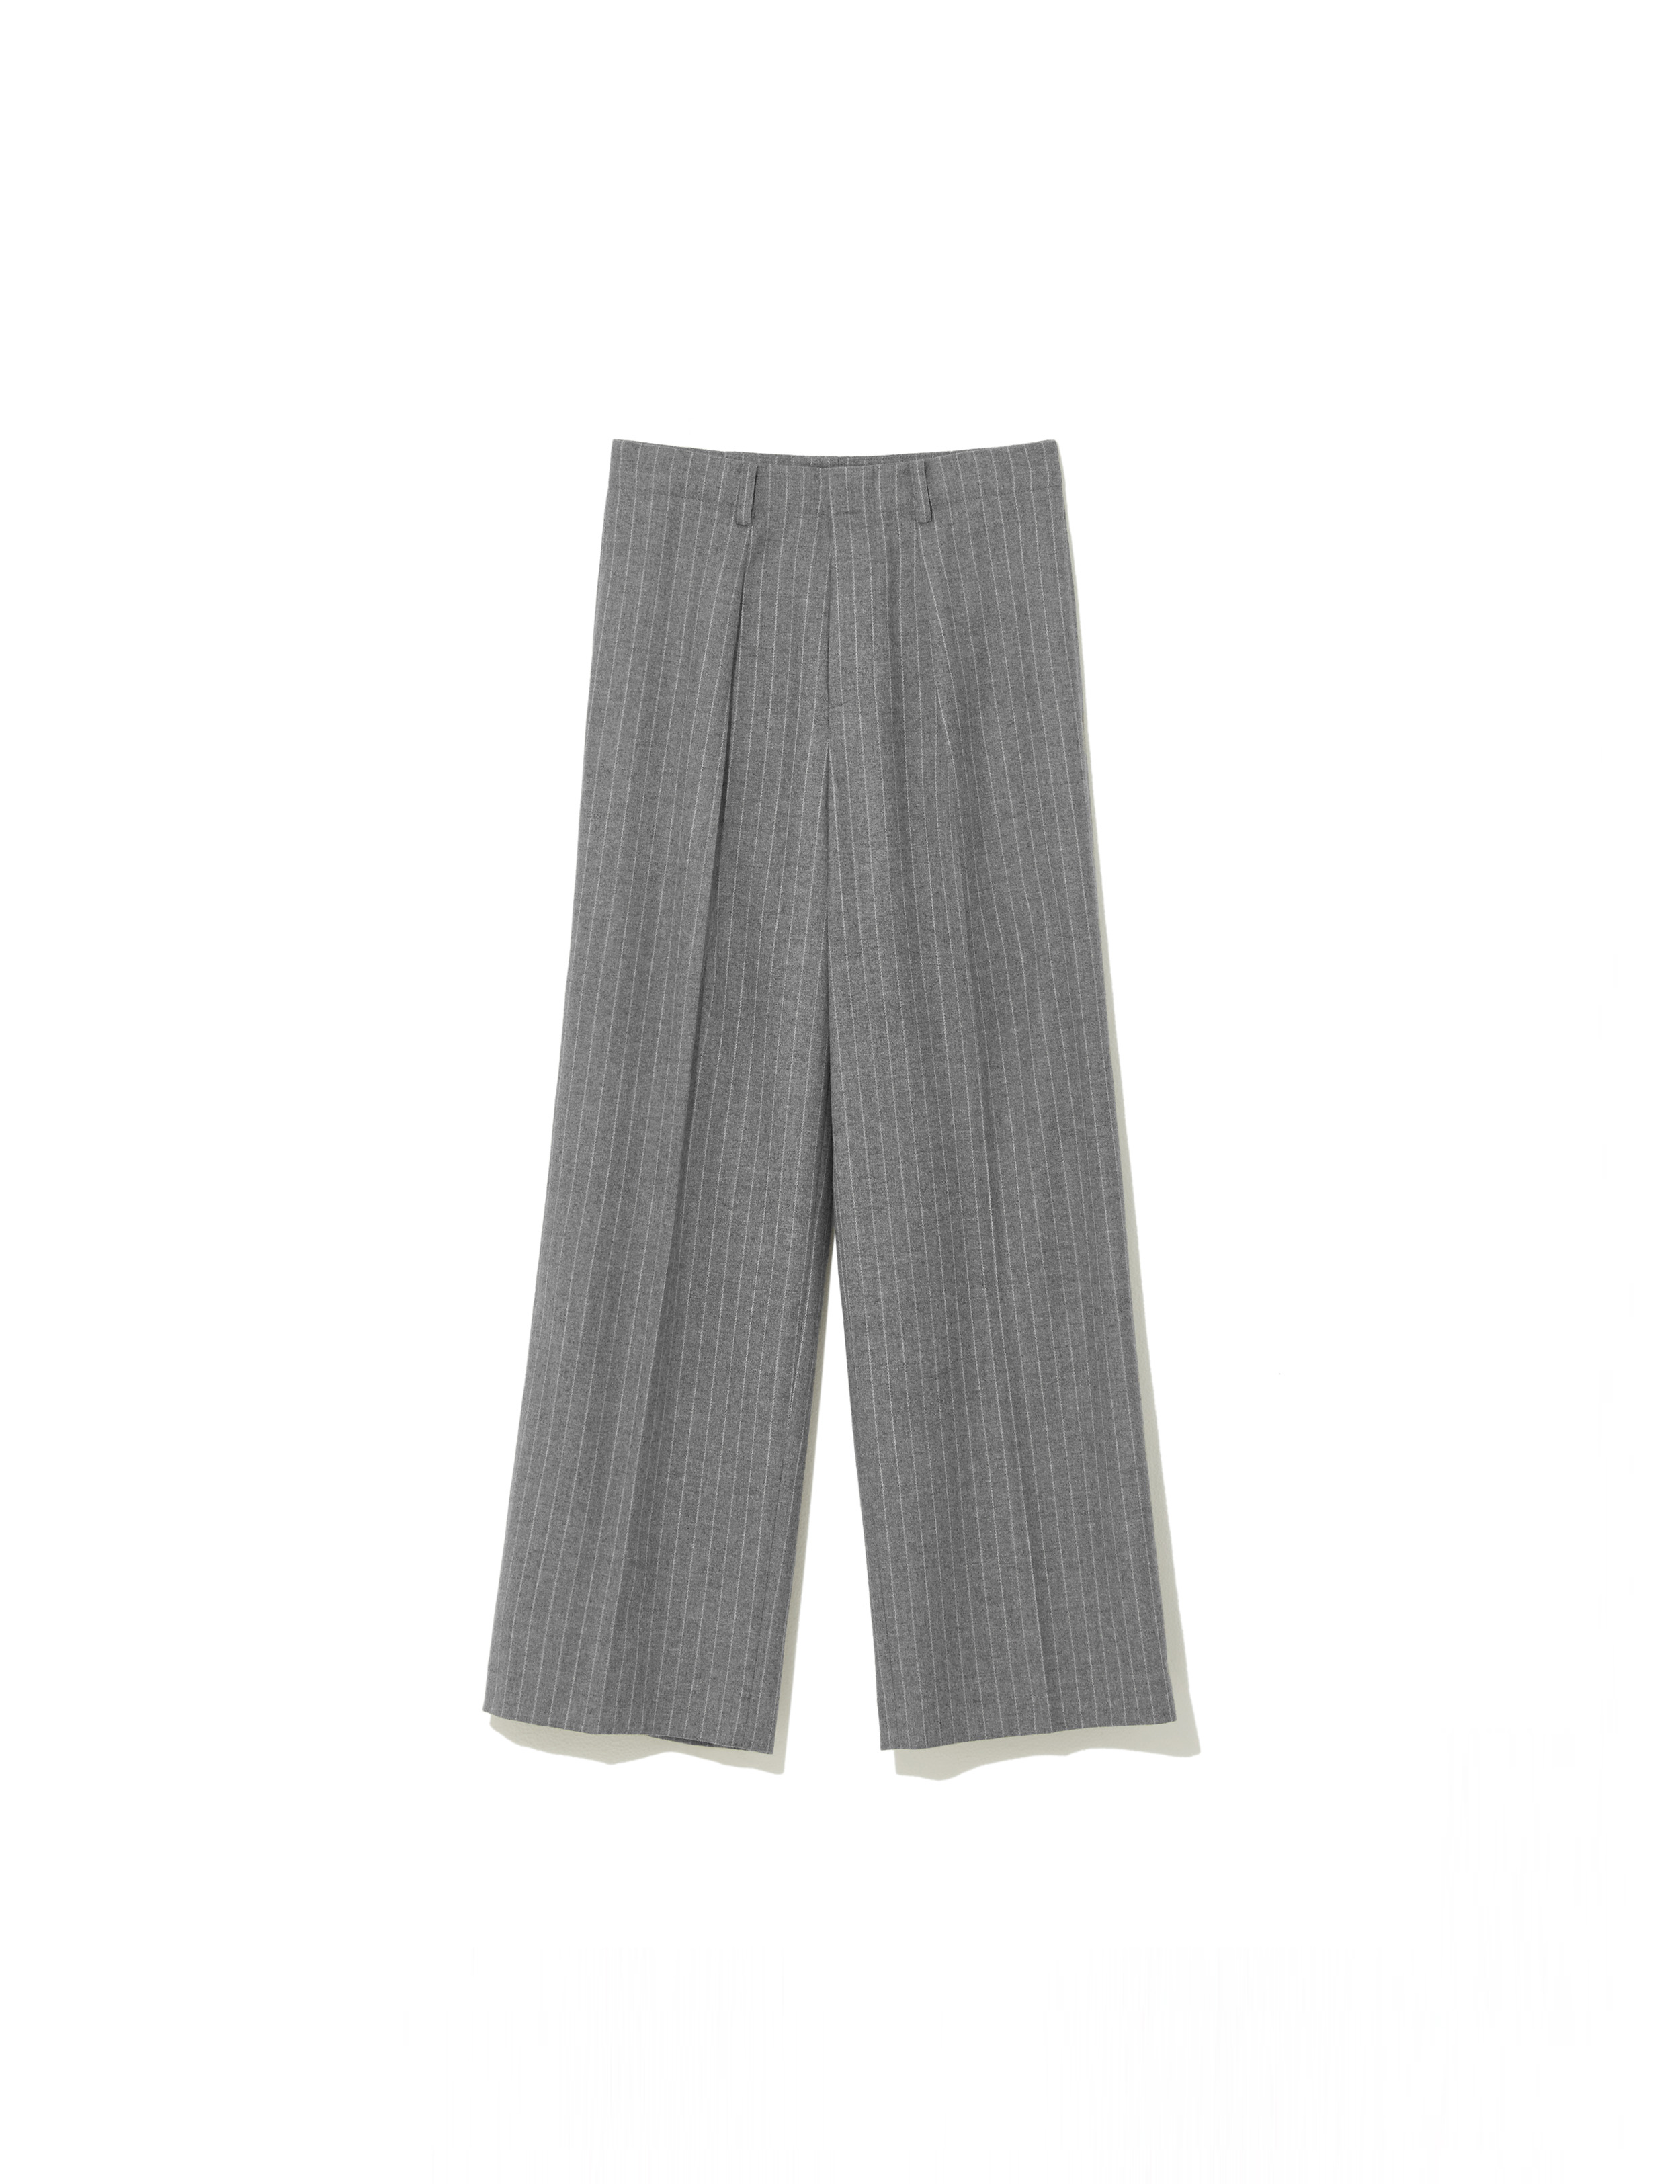 N.8 Plume trousers grey